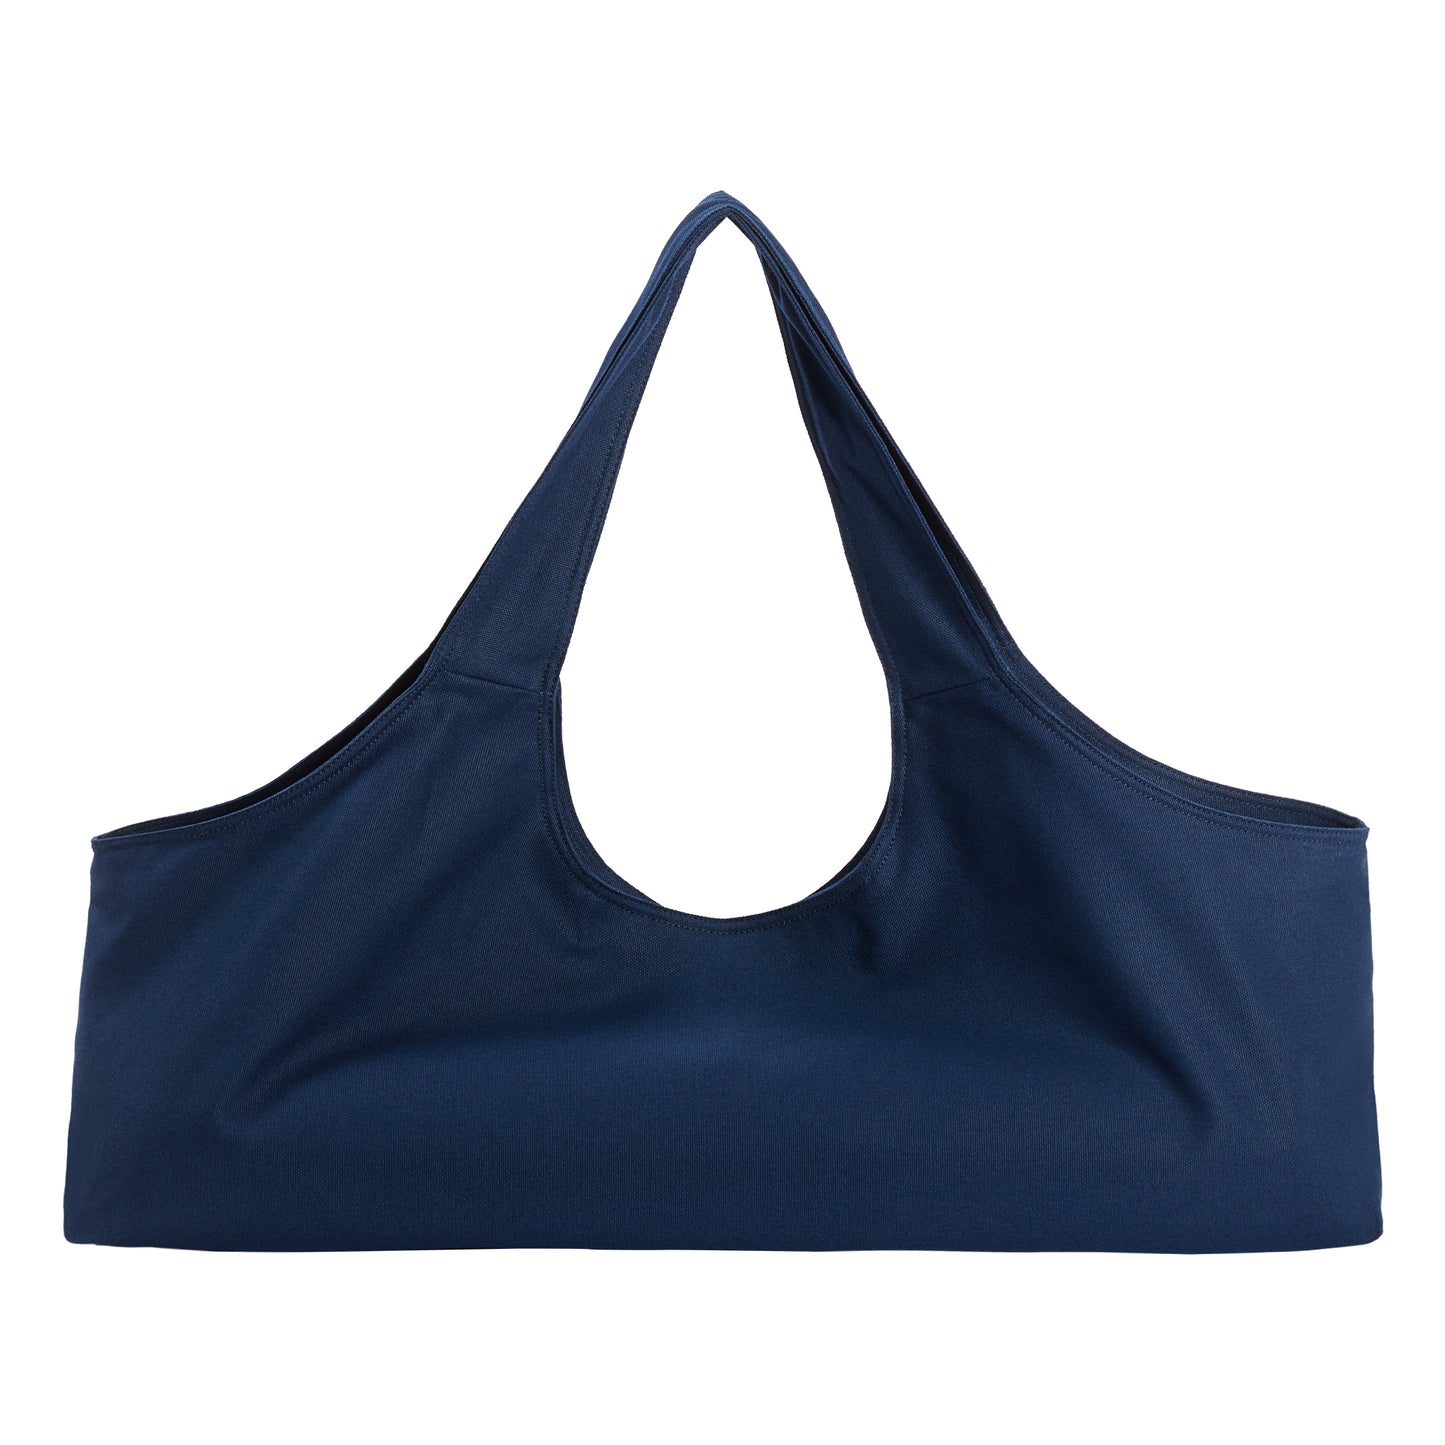 Cosmic Blue Everyday Yoga Bag